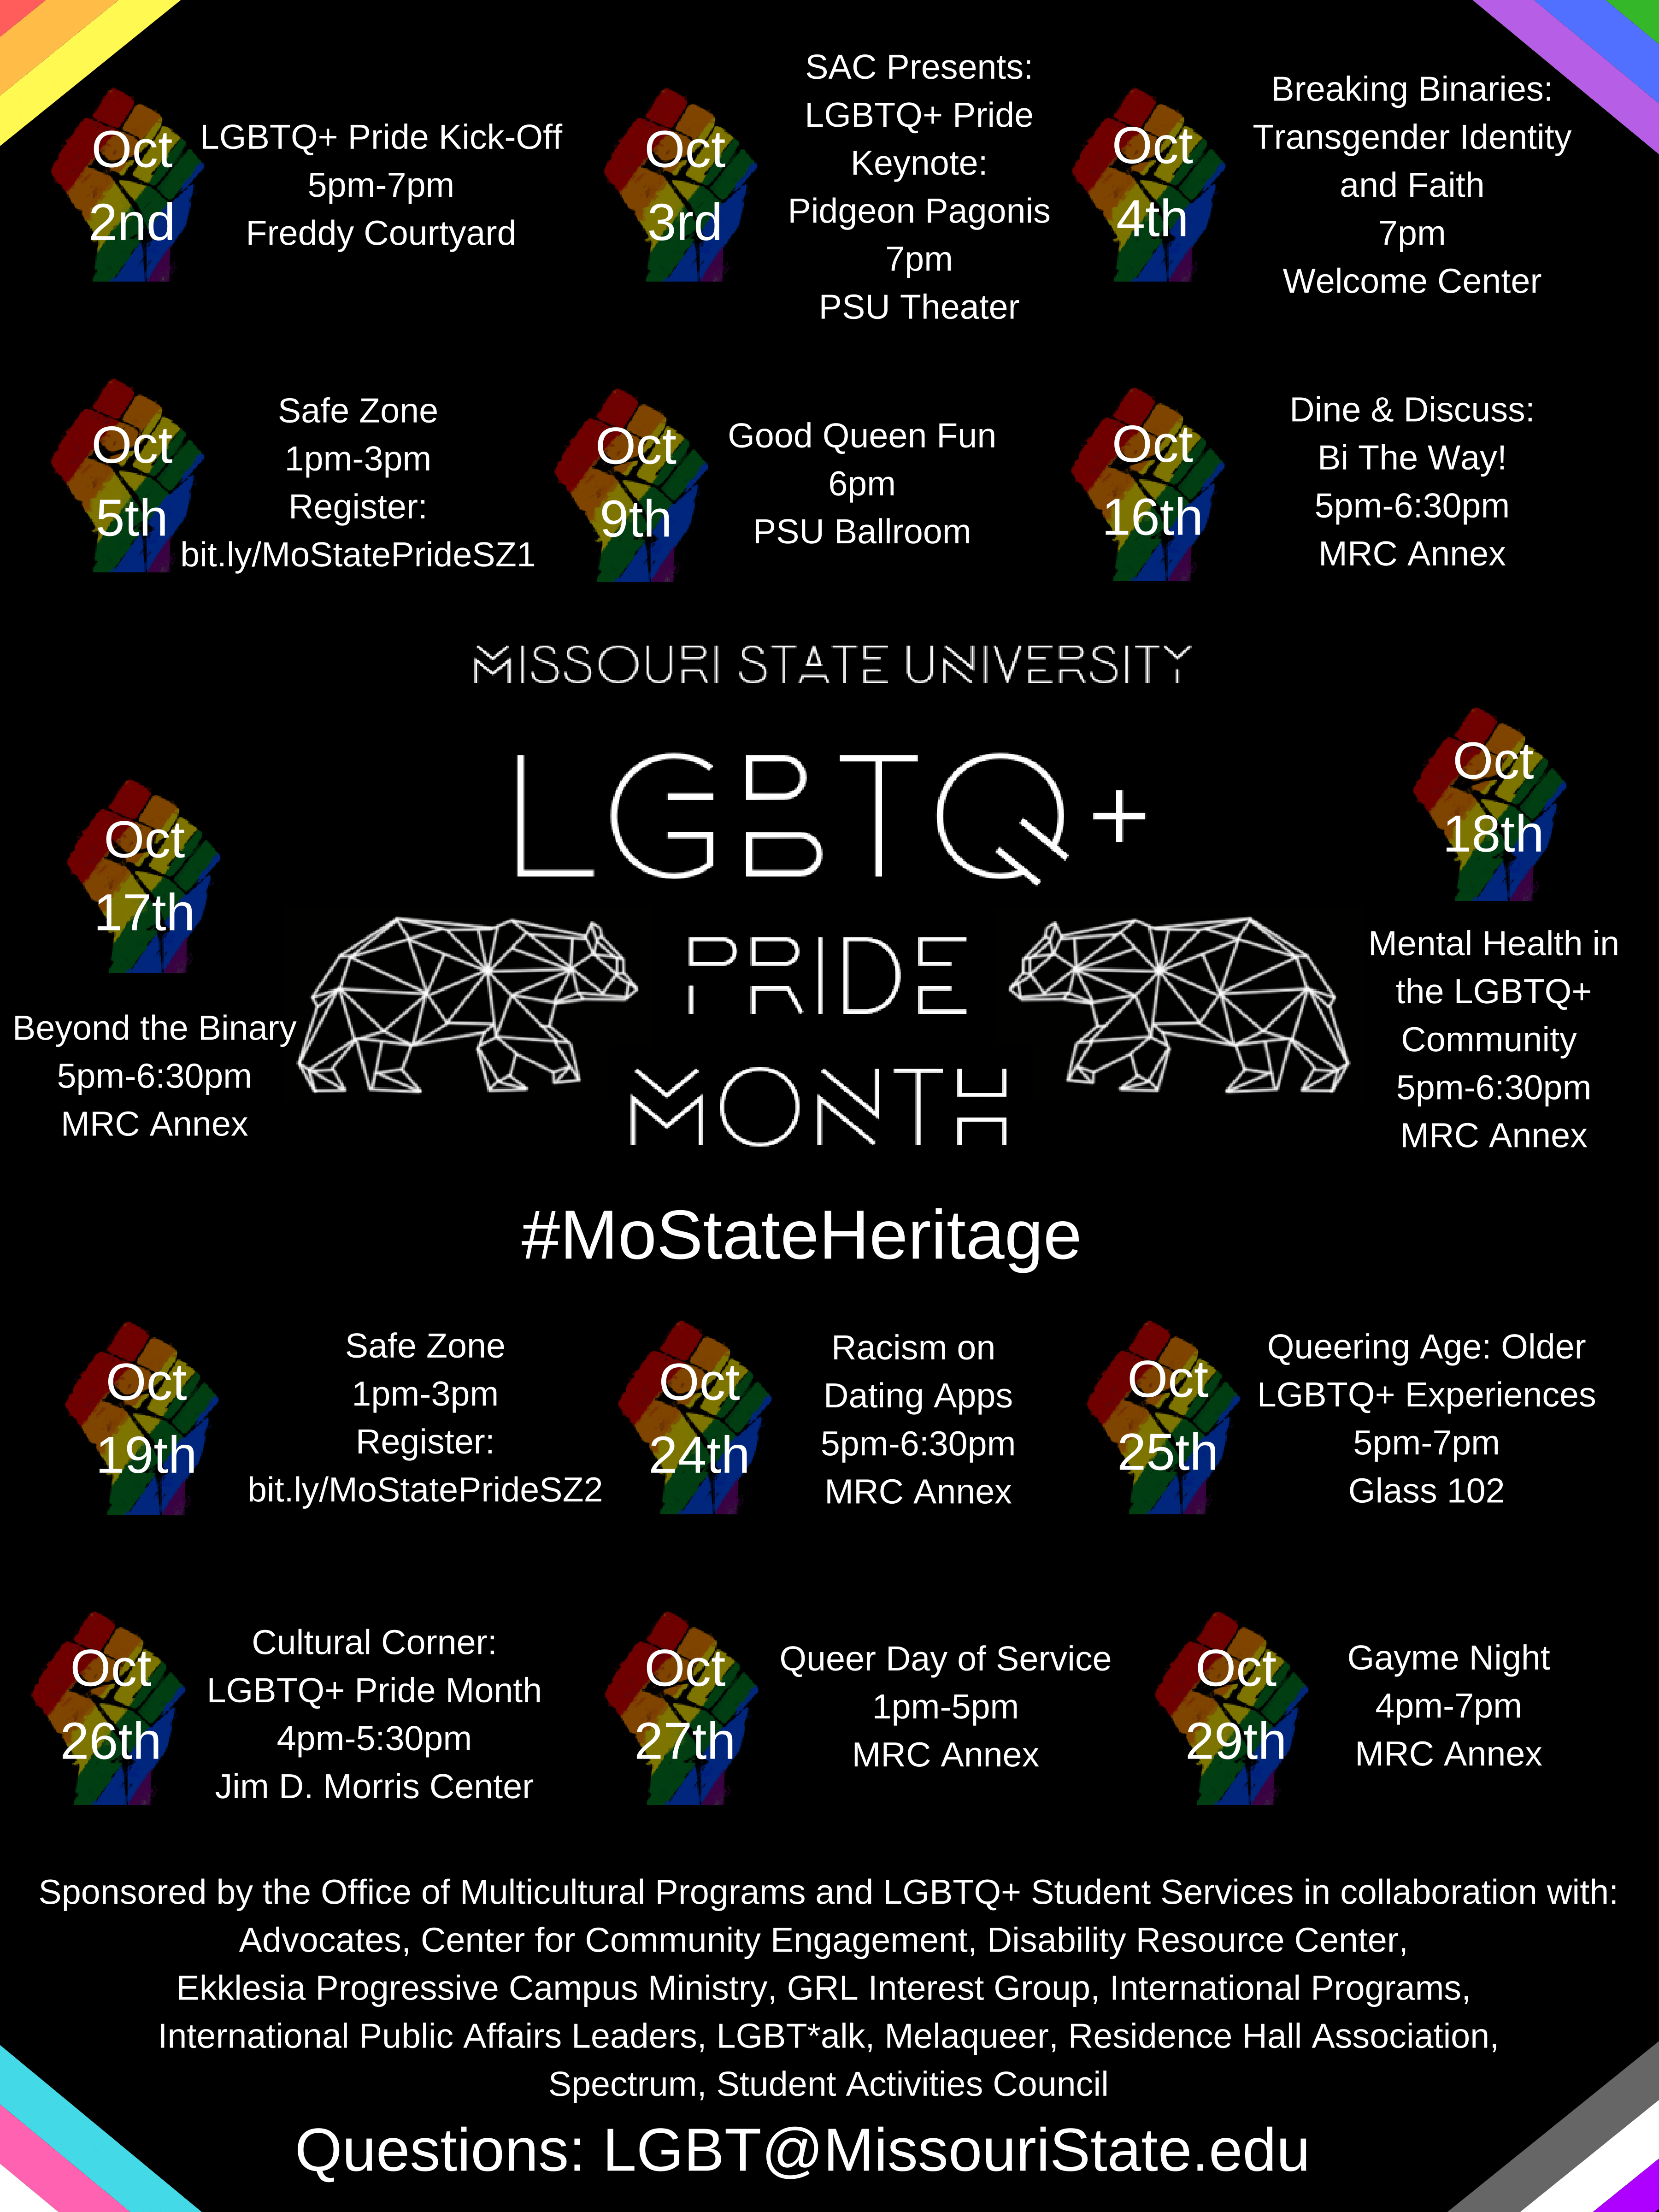 LGBTQ Pride Month 2018